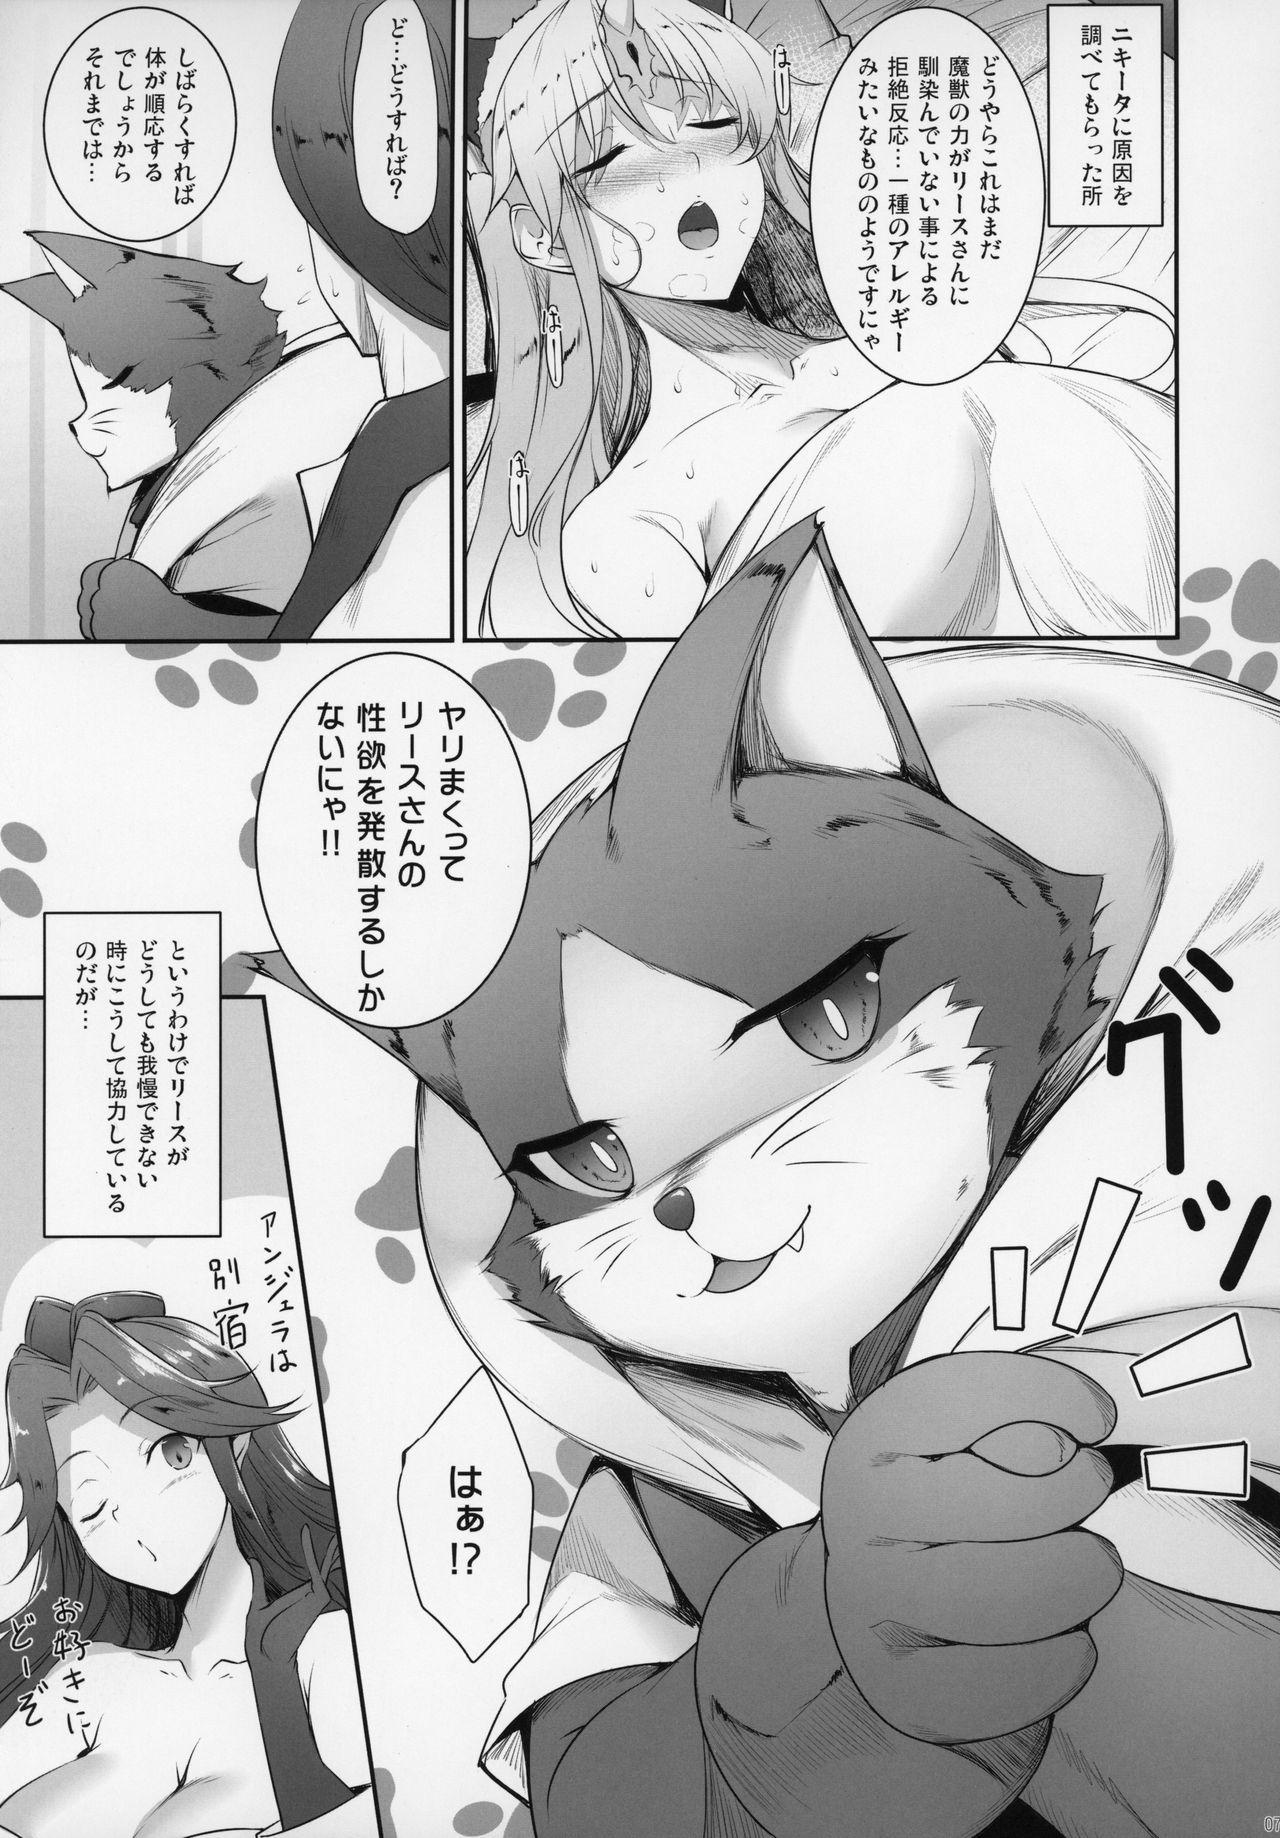 Hot Ookamihime no Ue - Seiken densetsu 3 Leather - Page 6